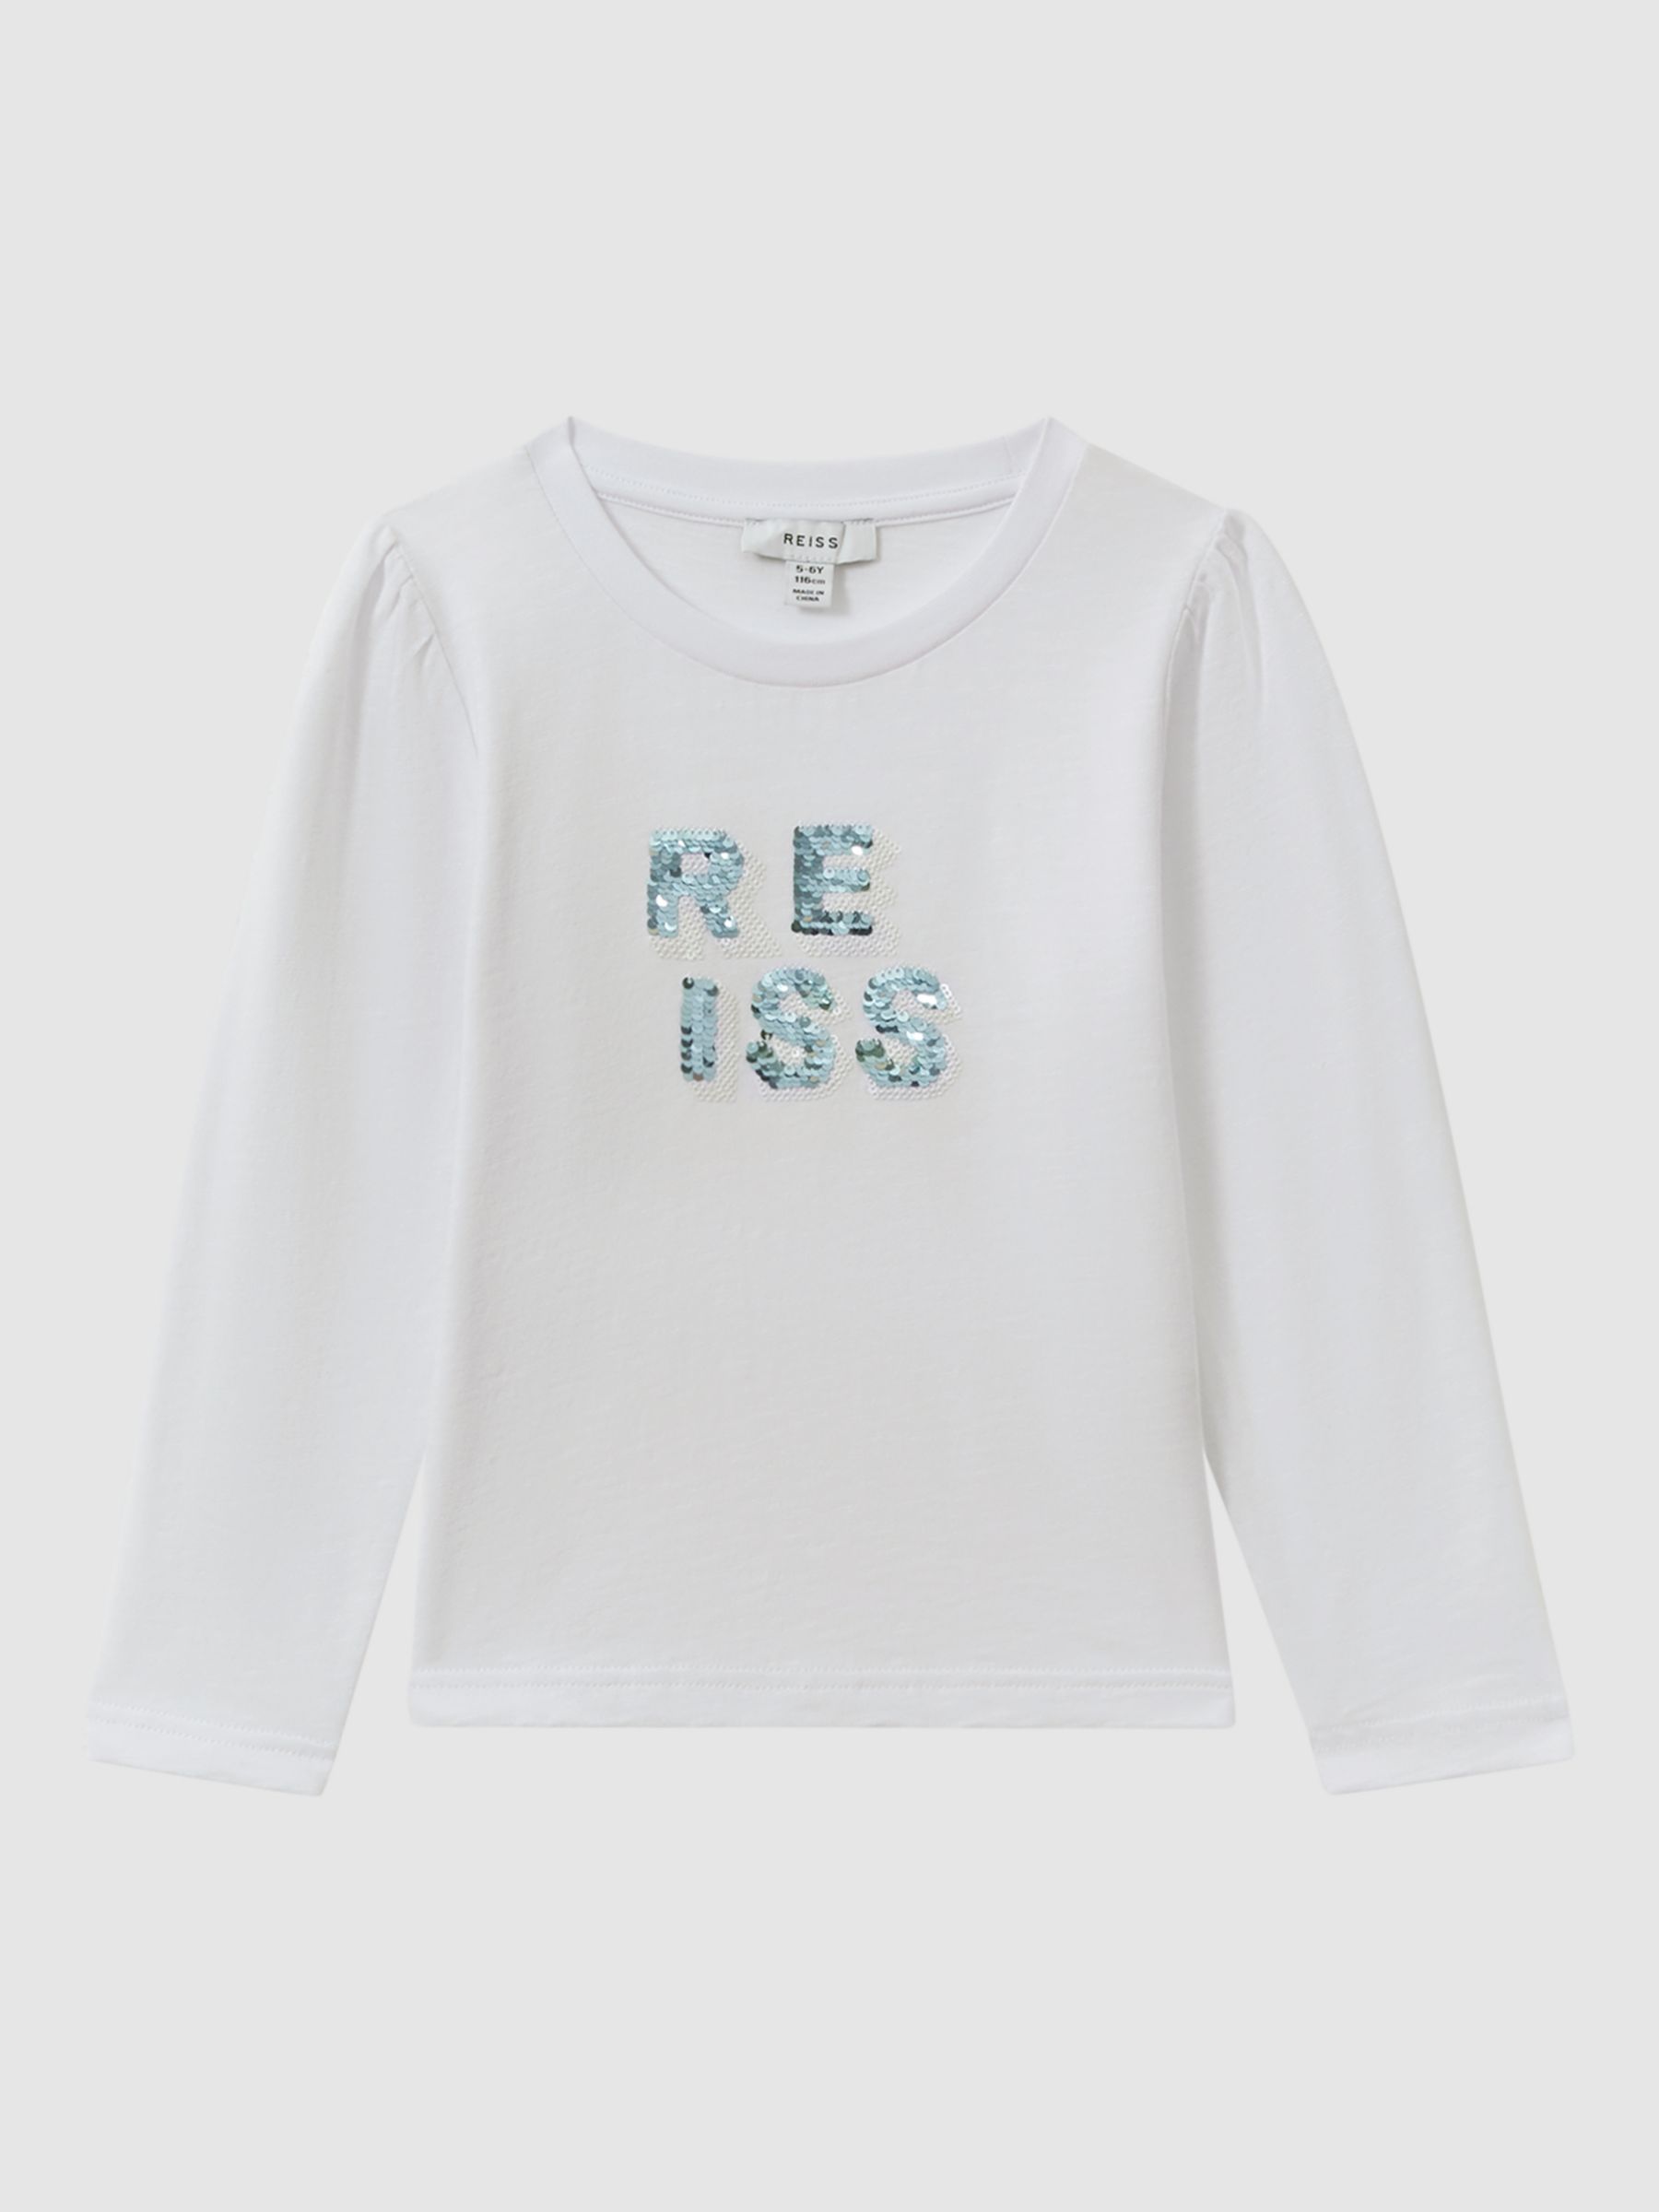 Reiss Kids' Ria Sequin Logo Long Sleeve T-Shirt, White, 5-6 years